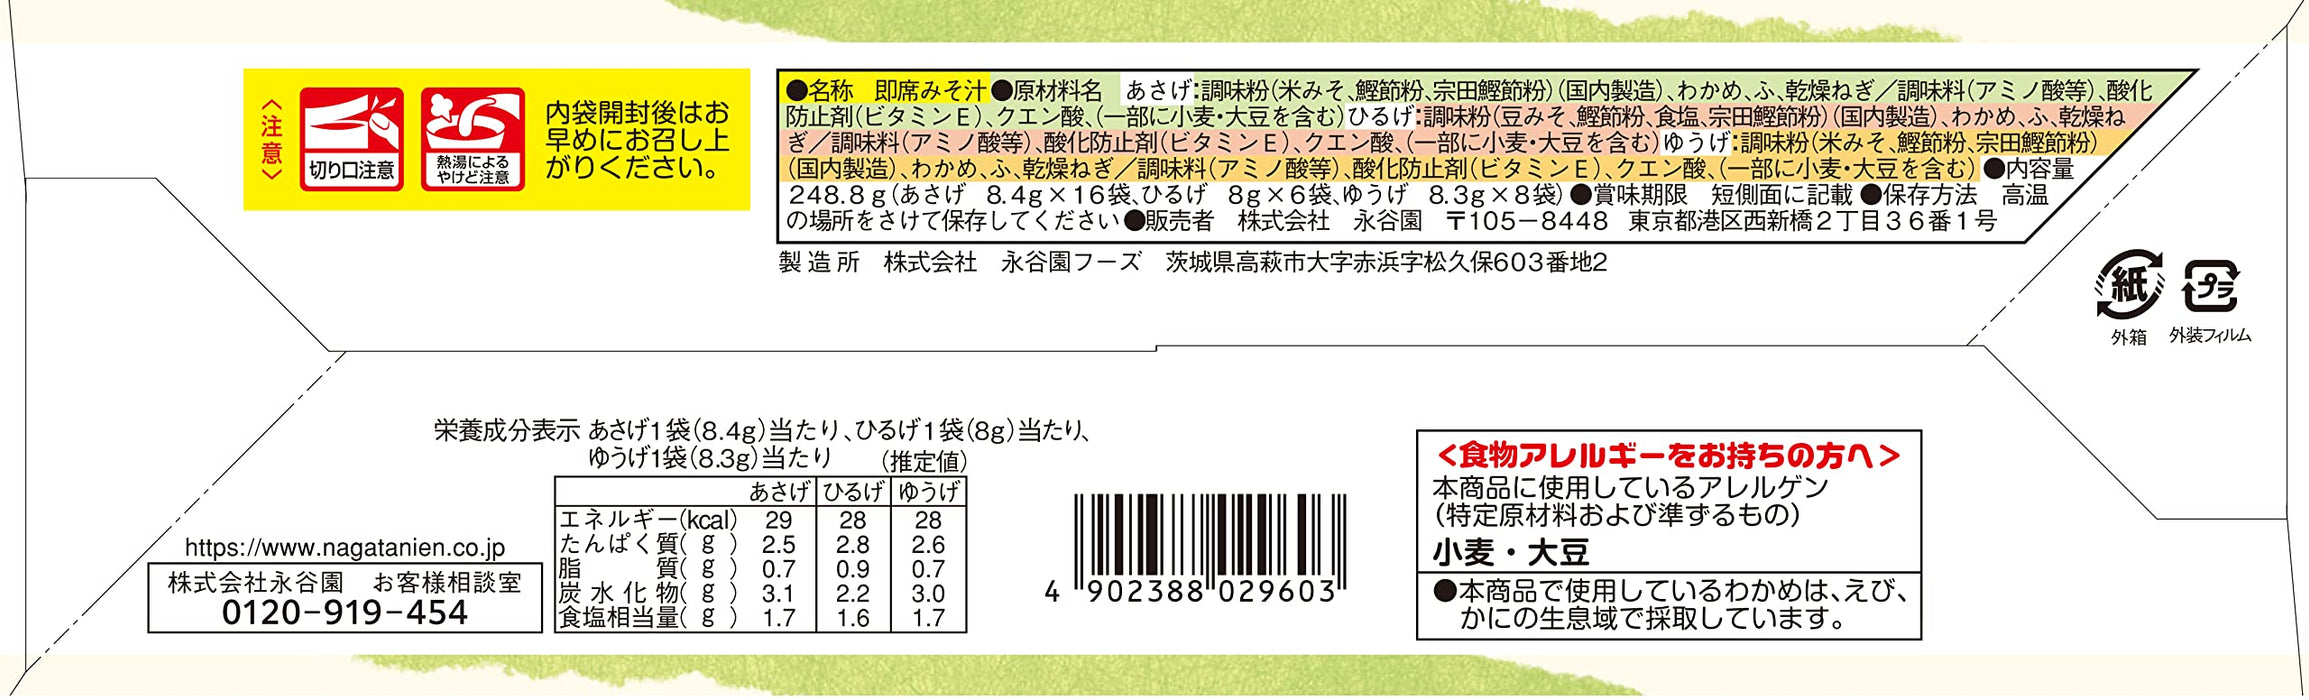 Nagatanien Miso Soup Assortment Box (Powder Type) 30 Servings From Japan